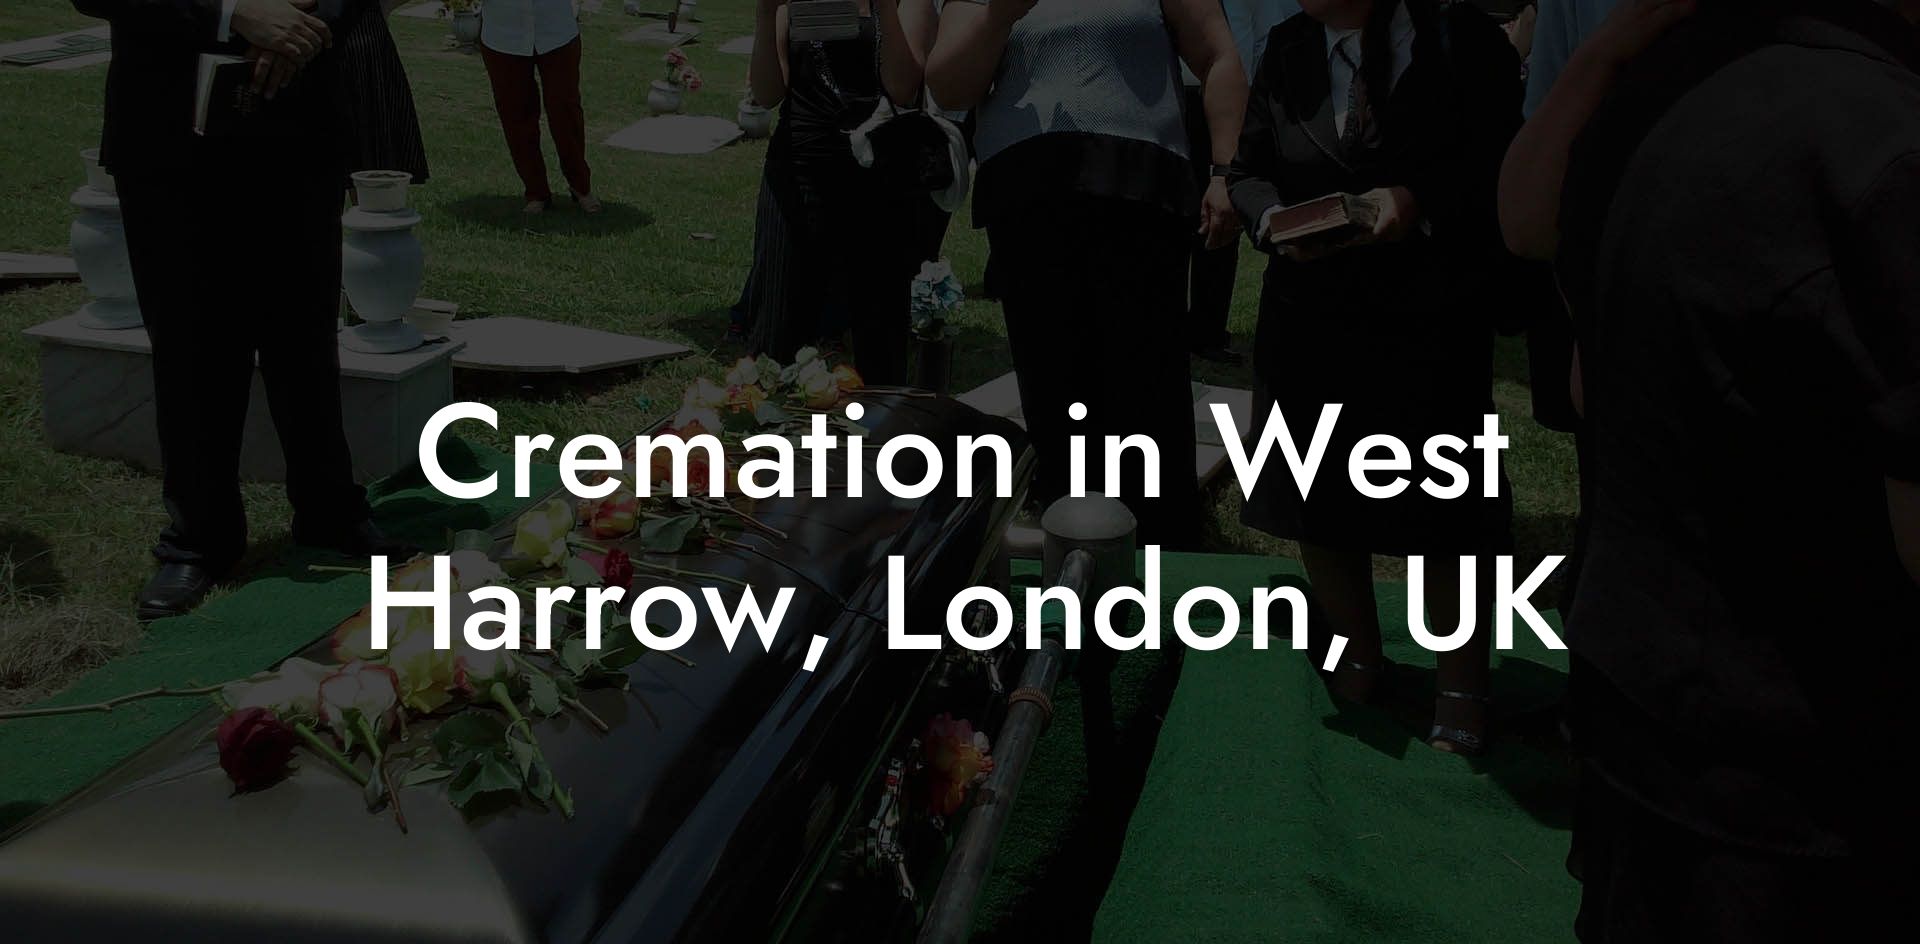 Cremation in West Harrow, London, UK